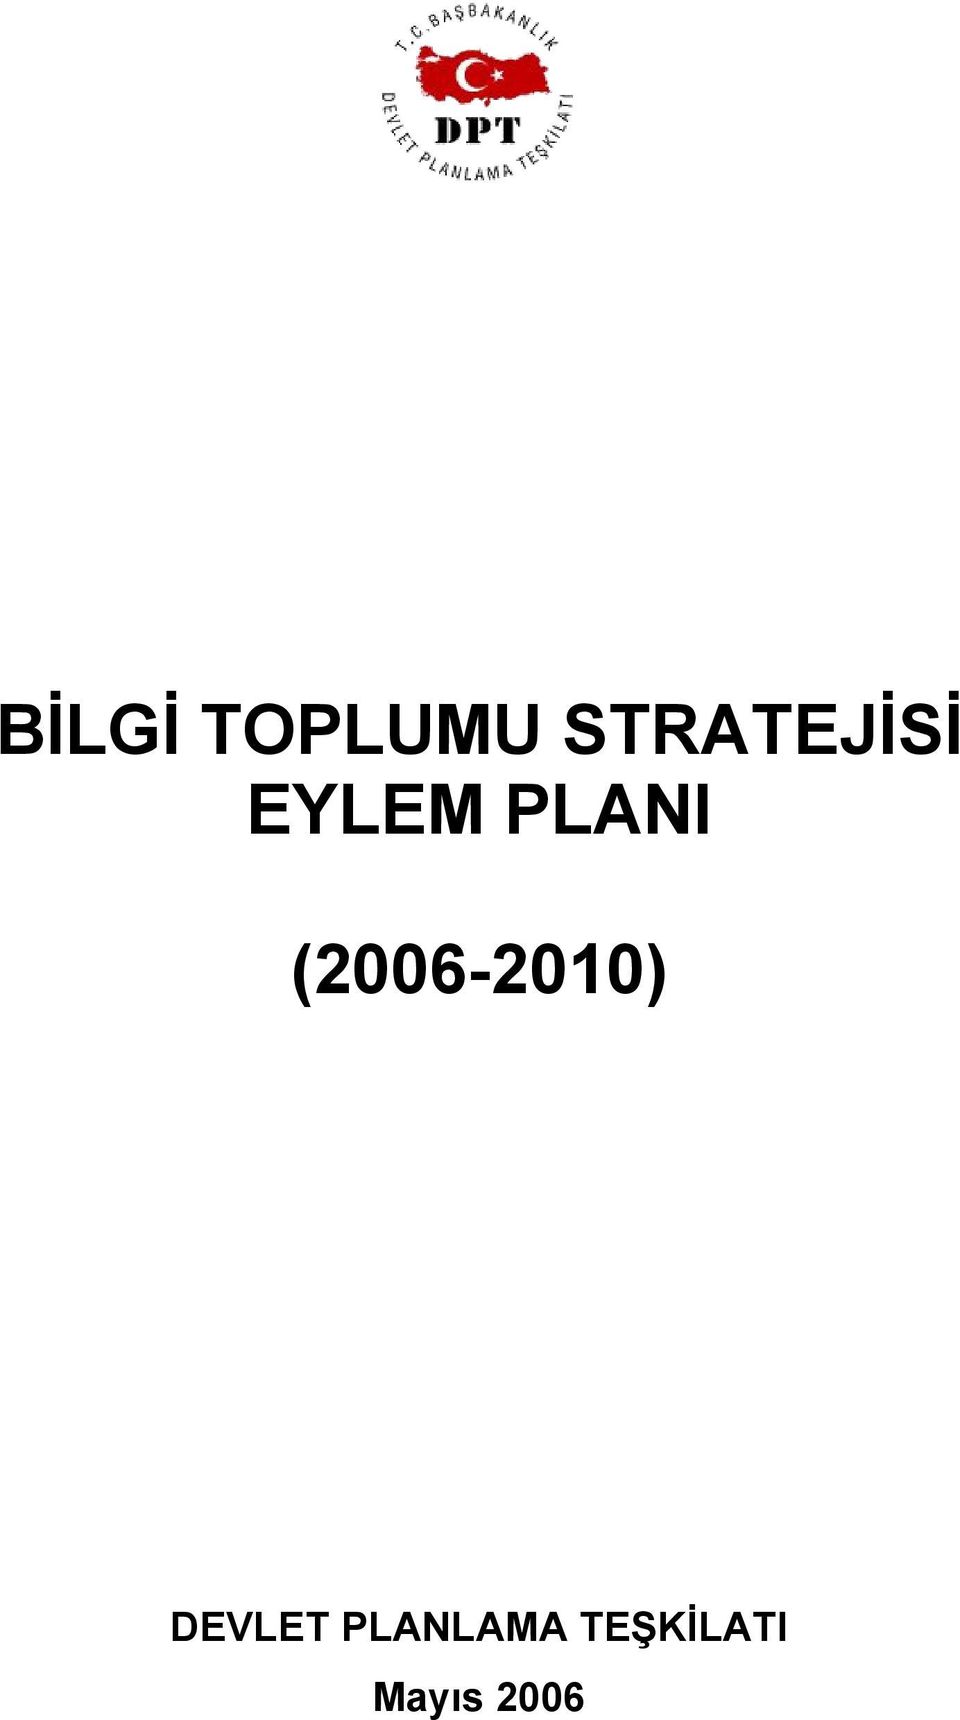 PLANI (2006-2010)